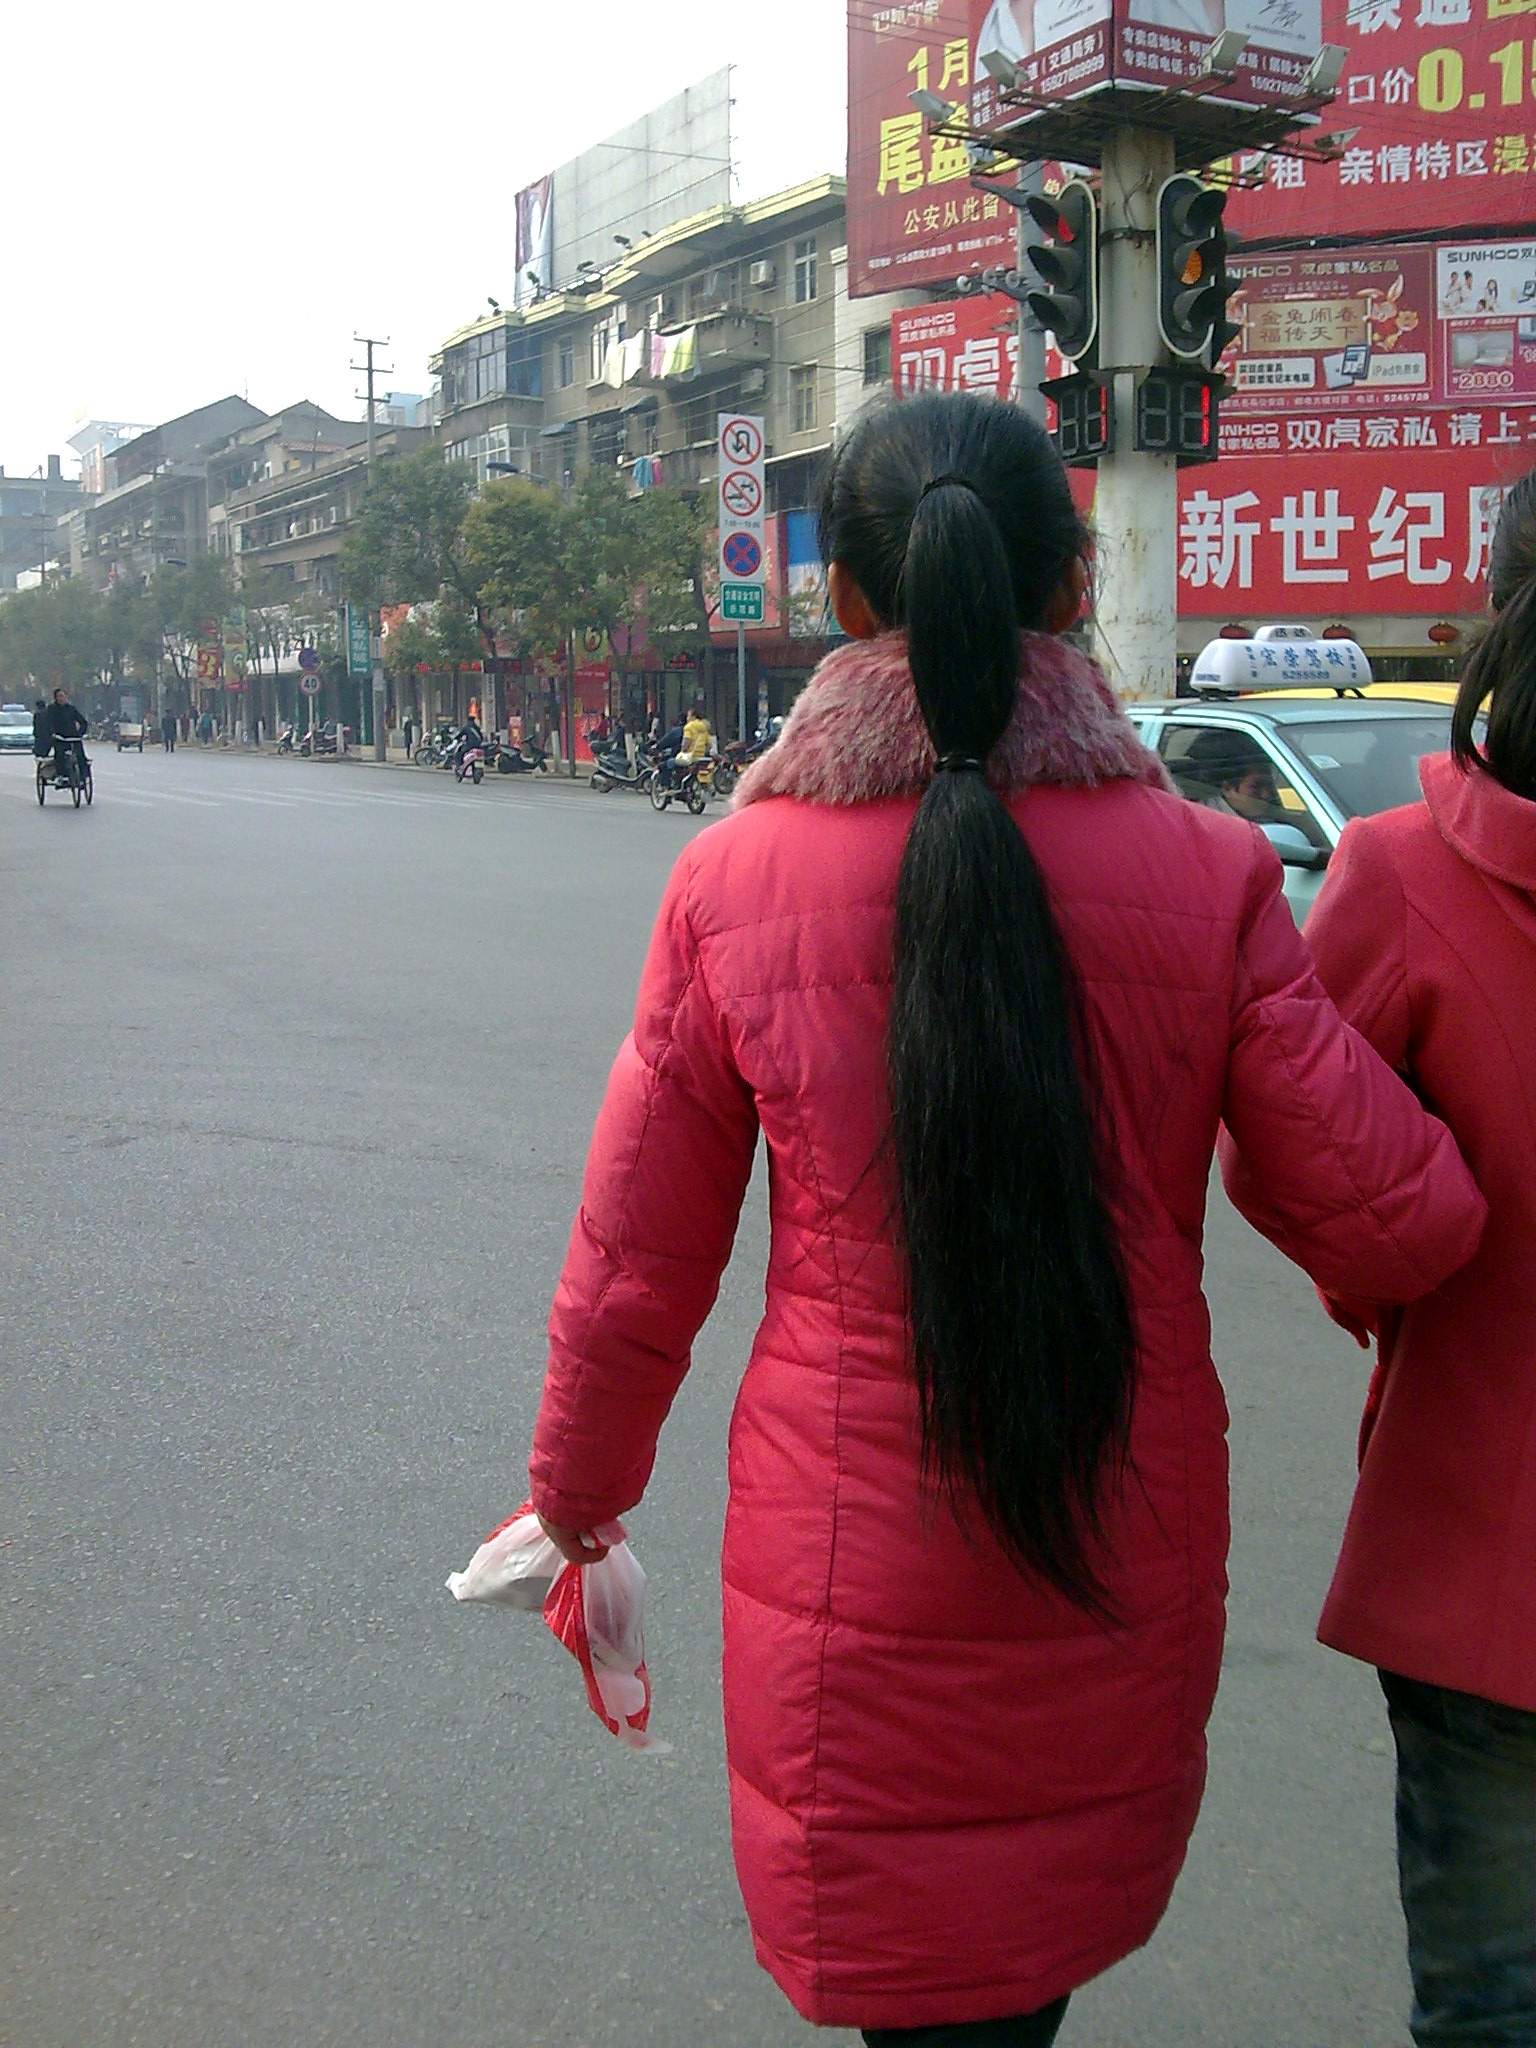 Streetshot of 2 ponytail